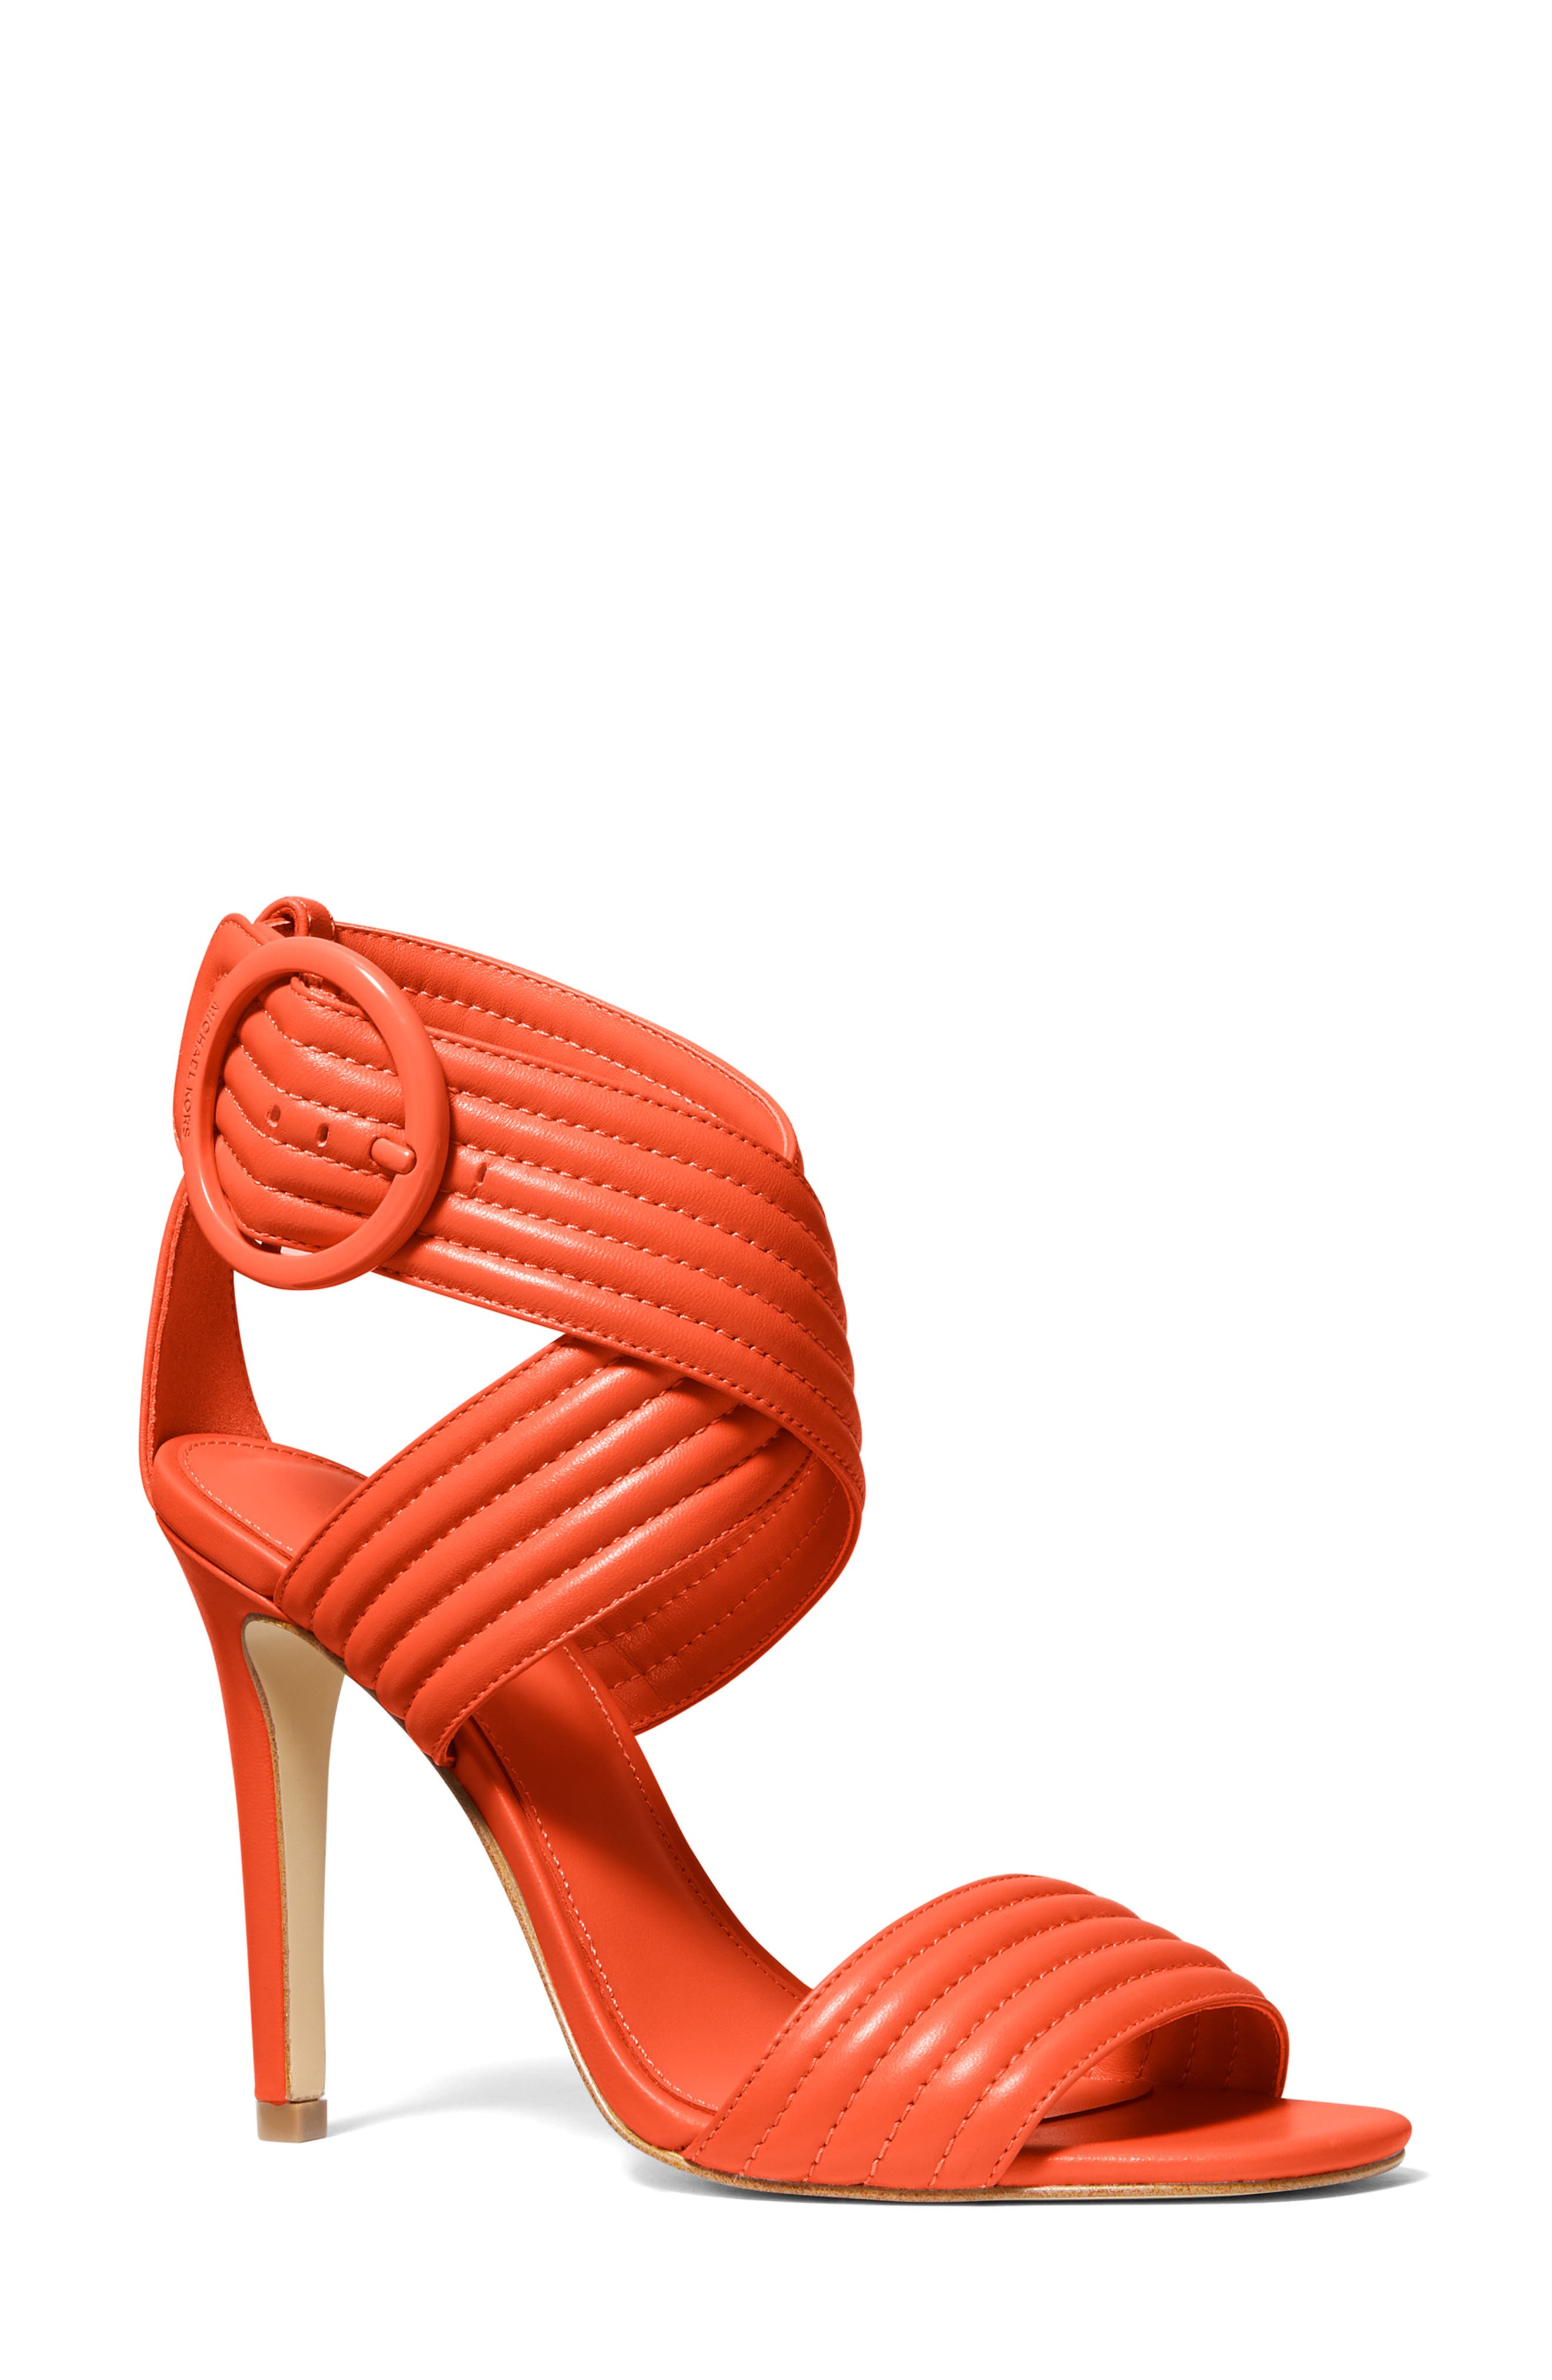 size 11 heels canada